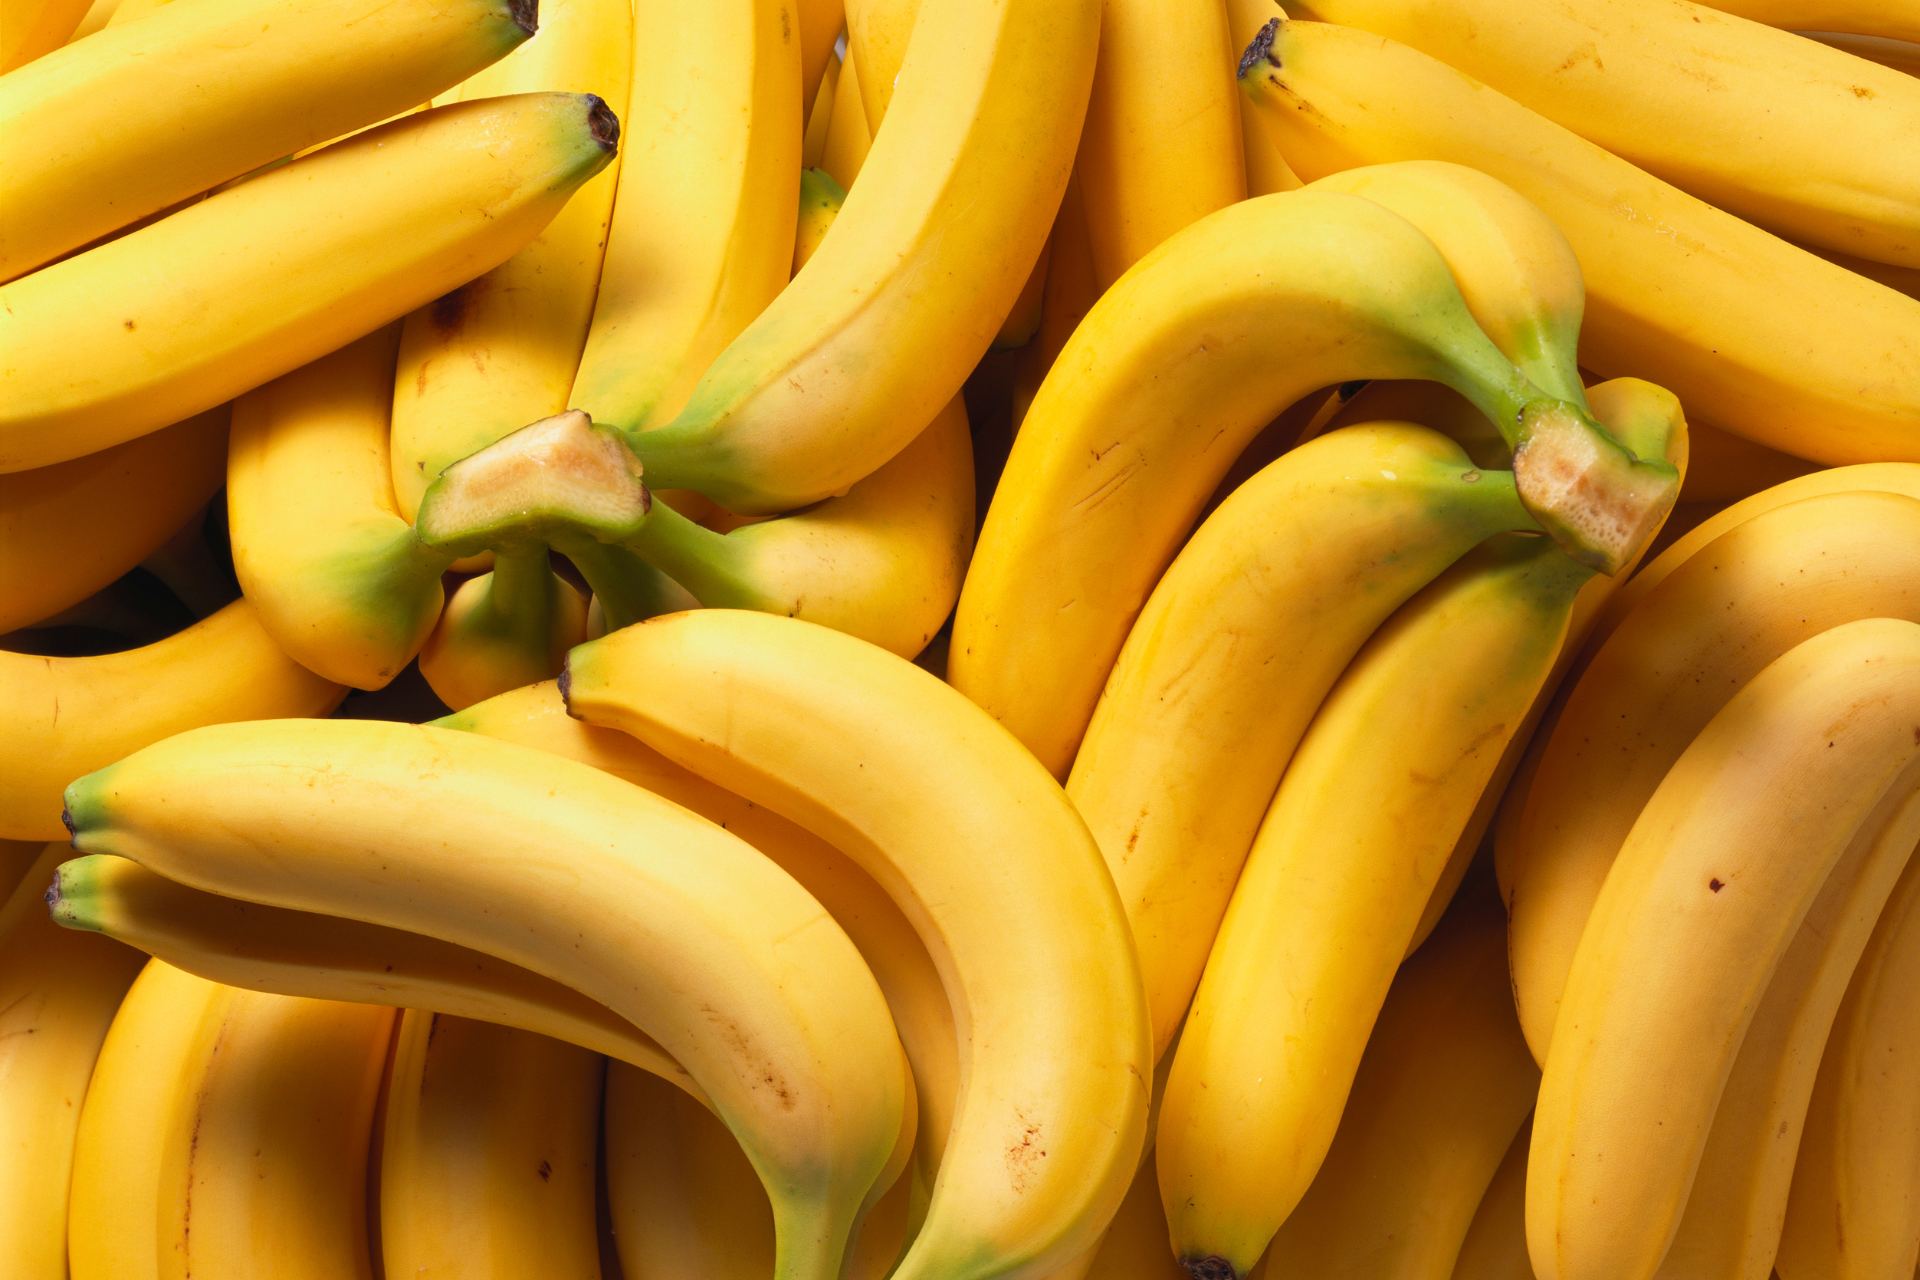 bananas are a good source of potassium